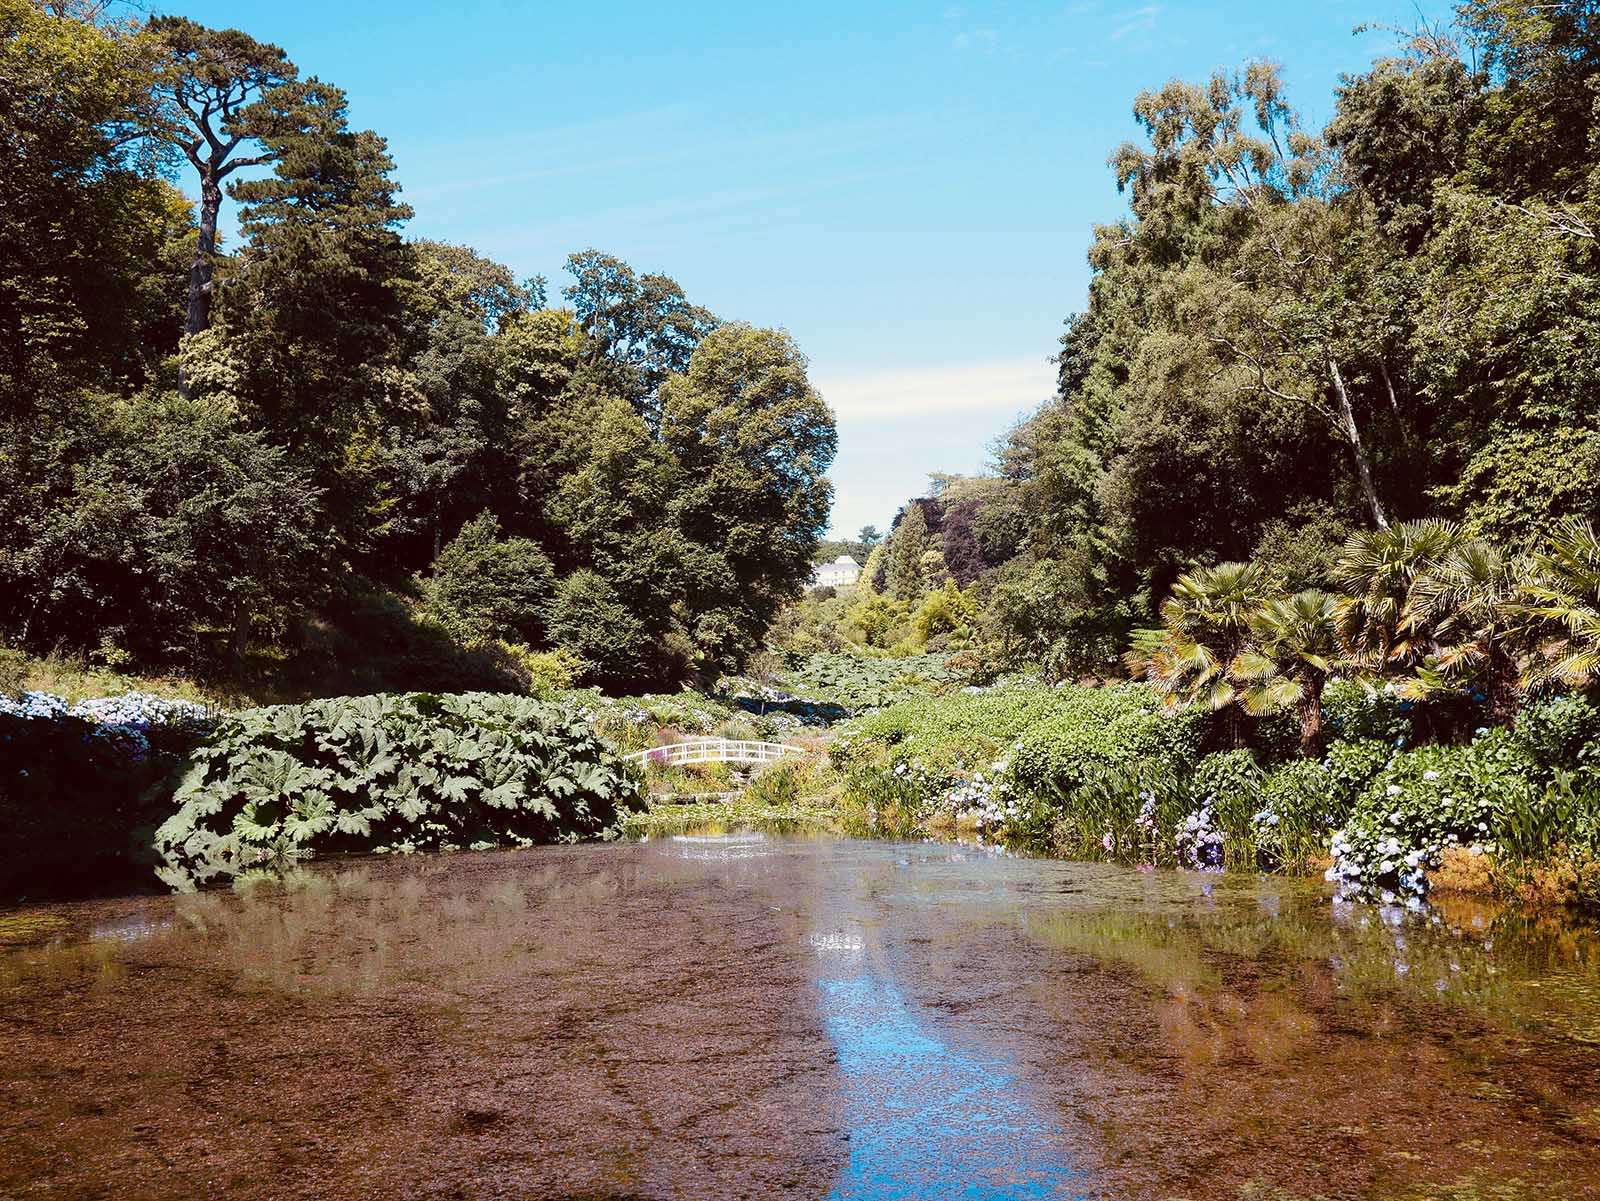 The pond at Trebah Garden.